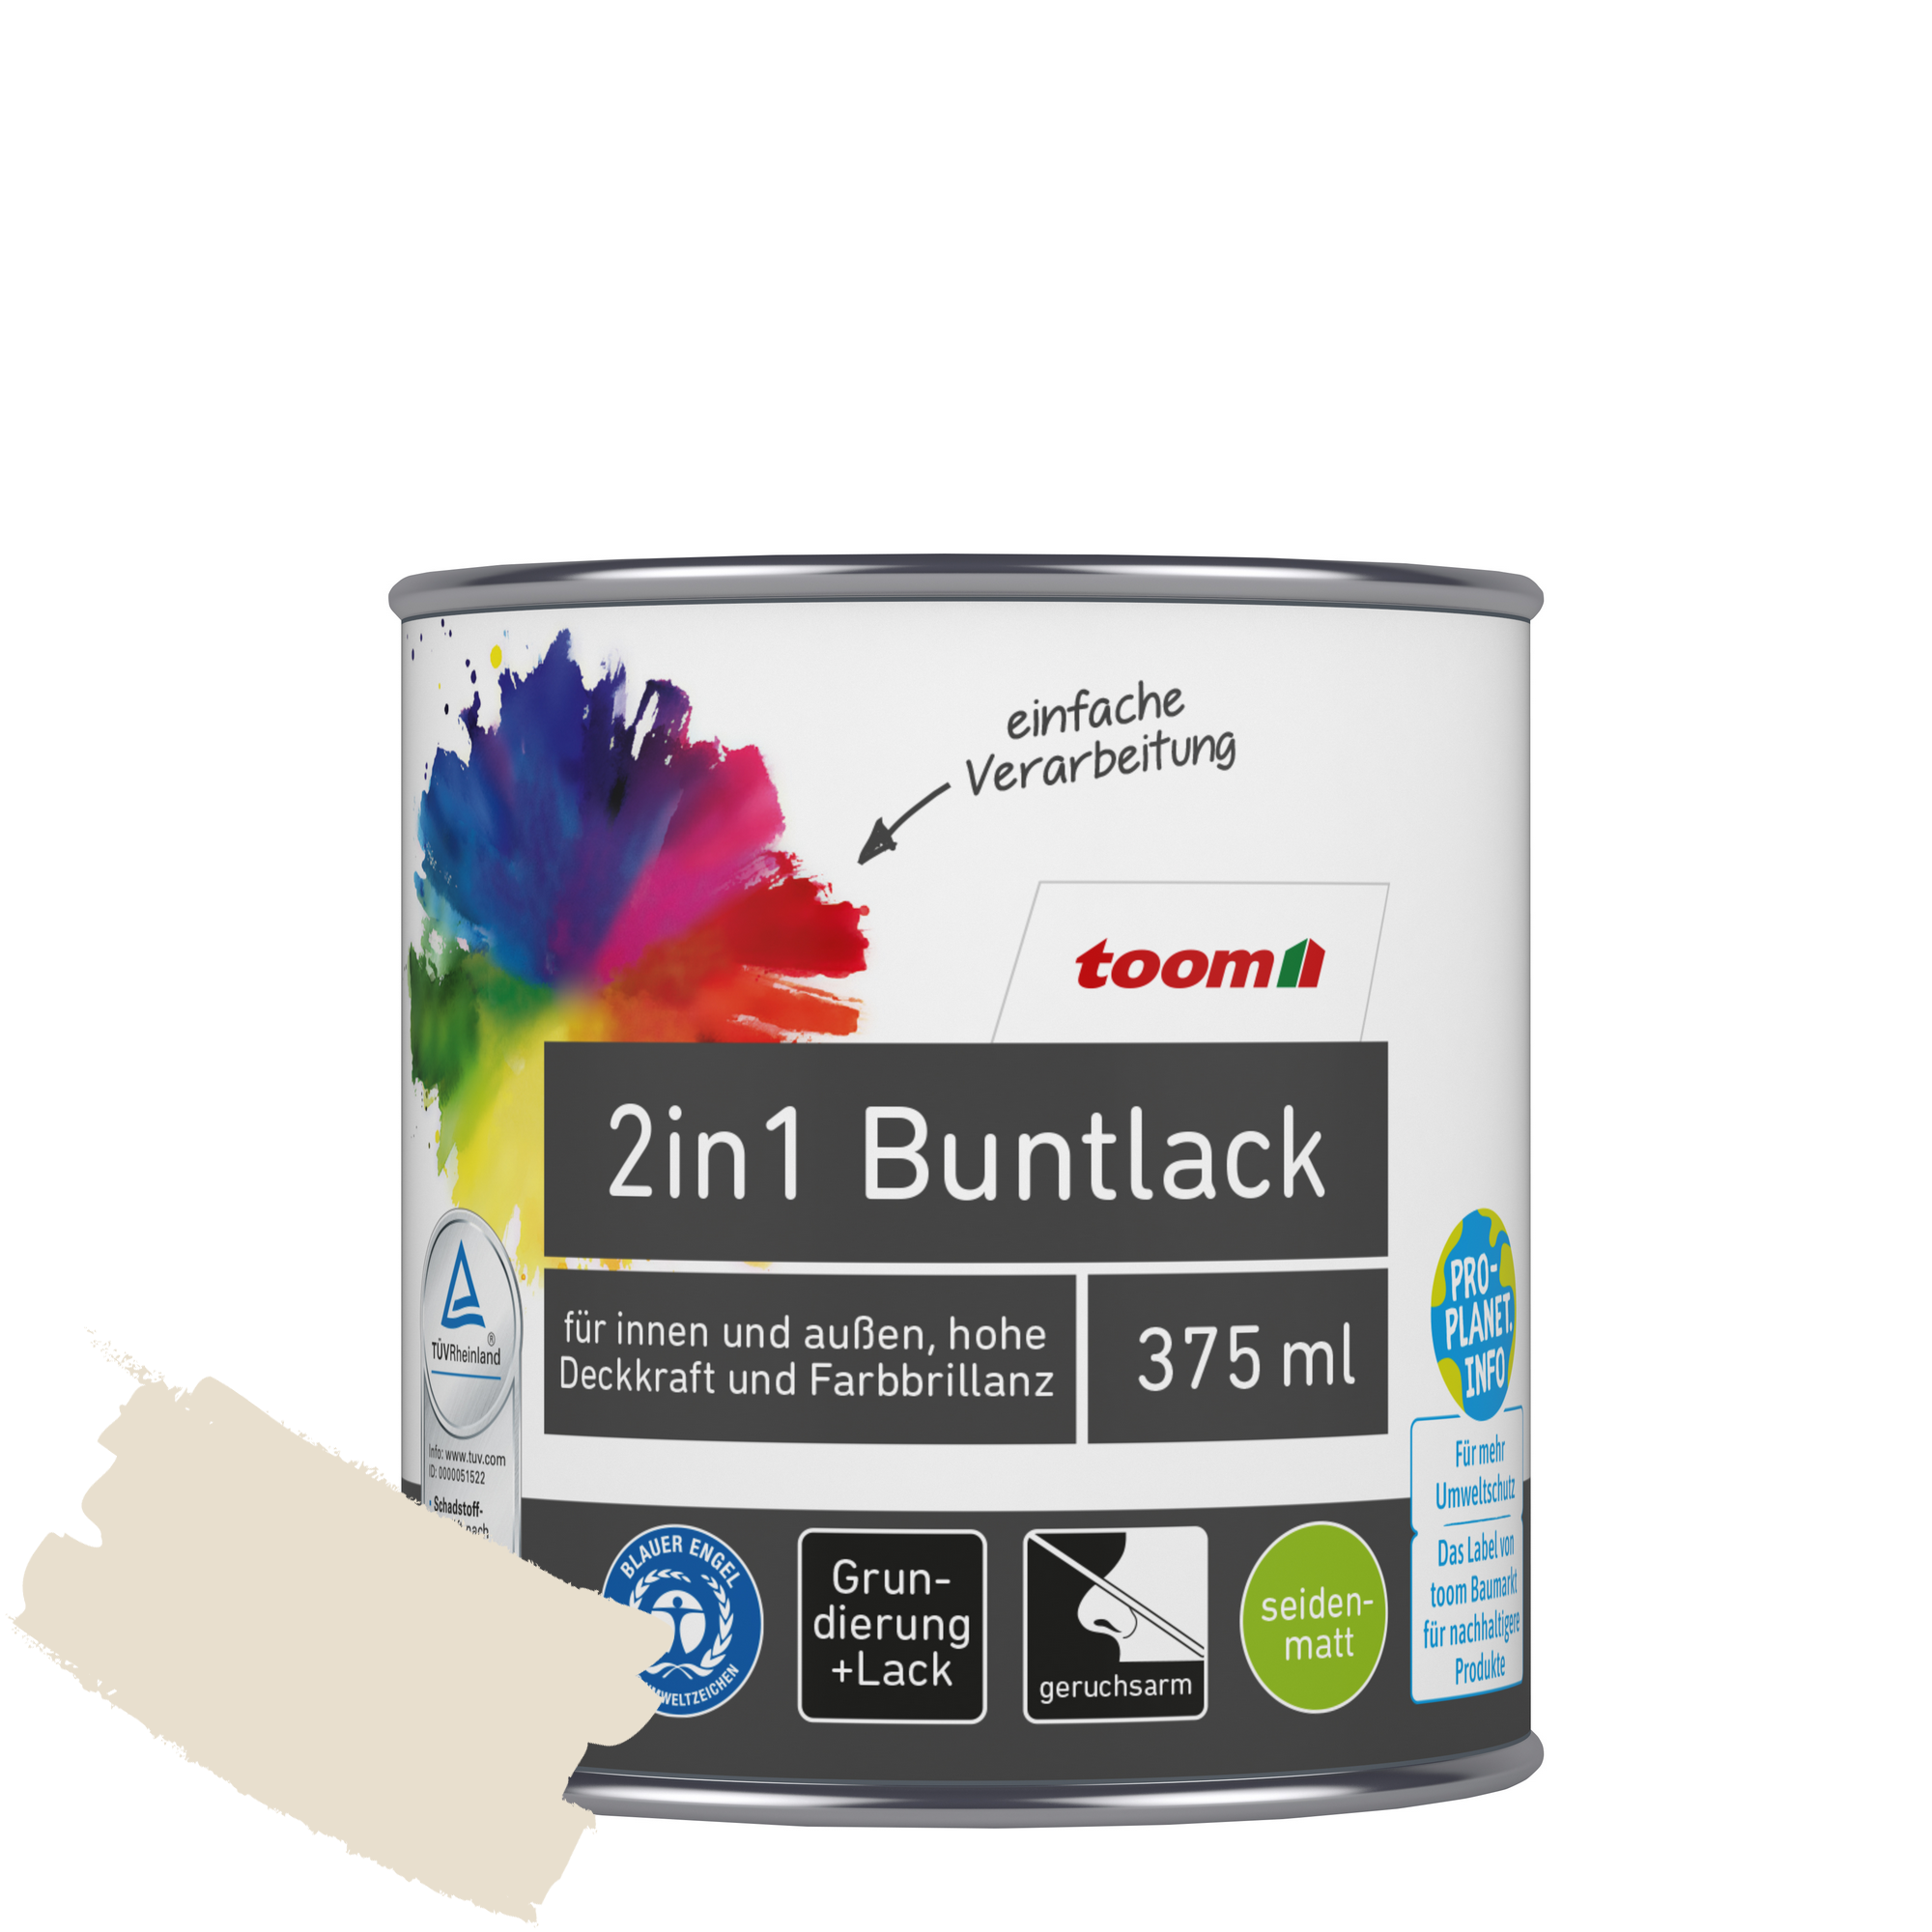 2in1 Buntlack 'Bergkristall' cremeweiß seidenmatt 375 ml + product picture